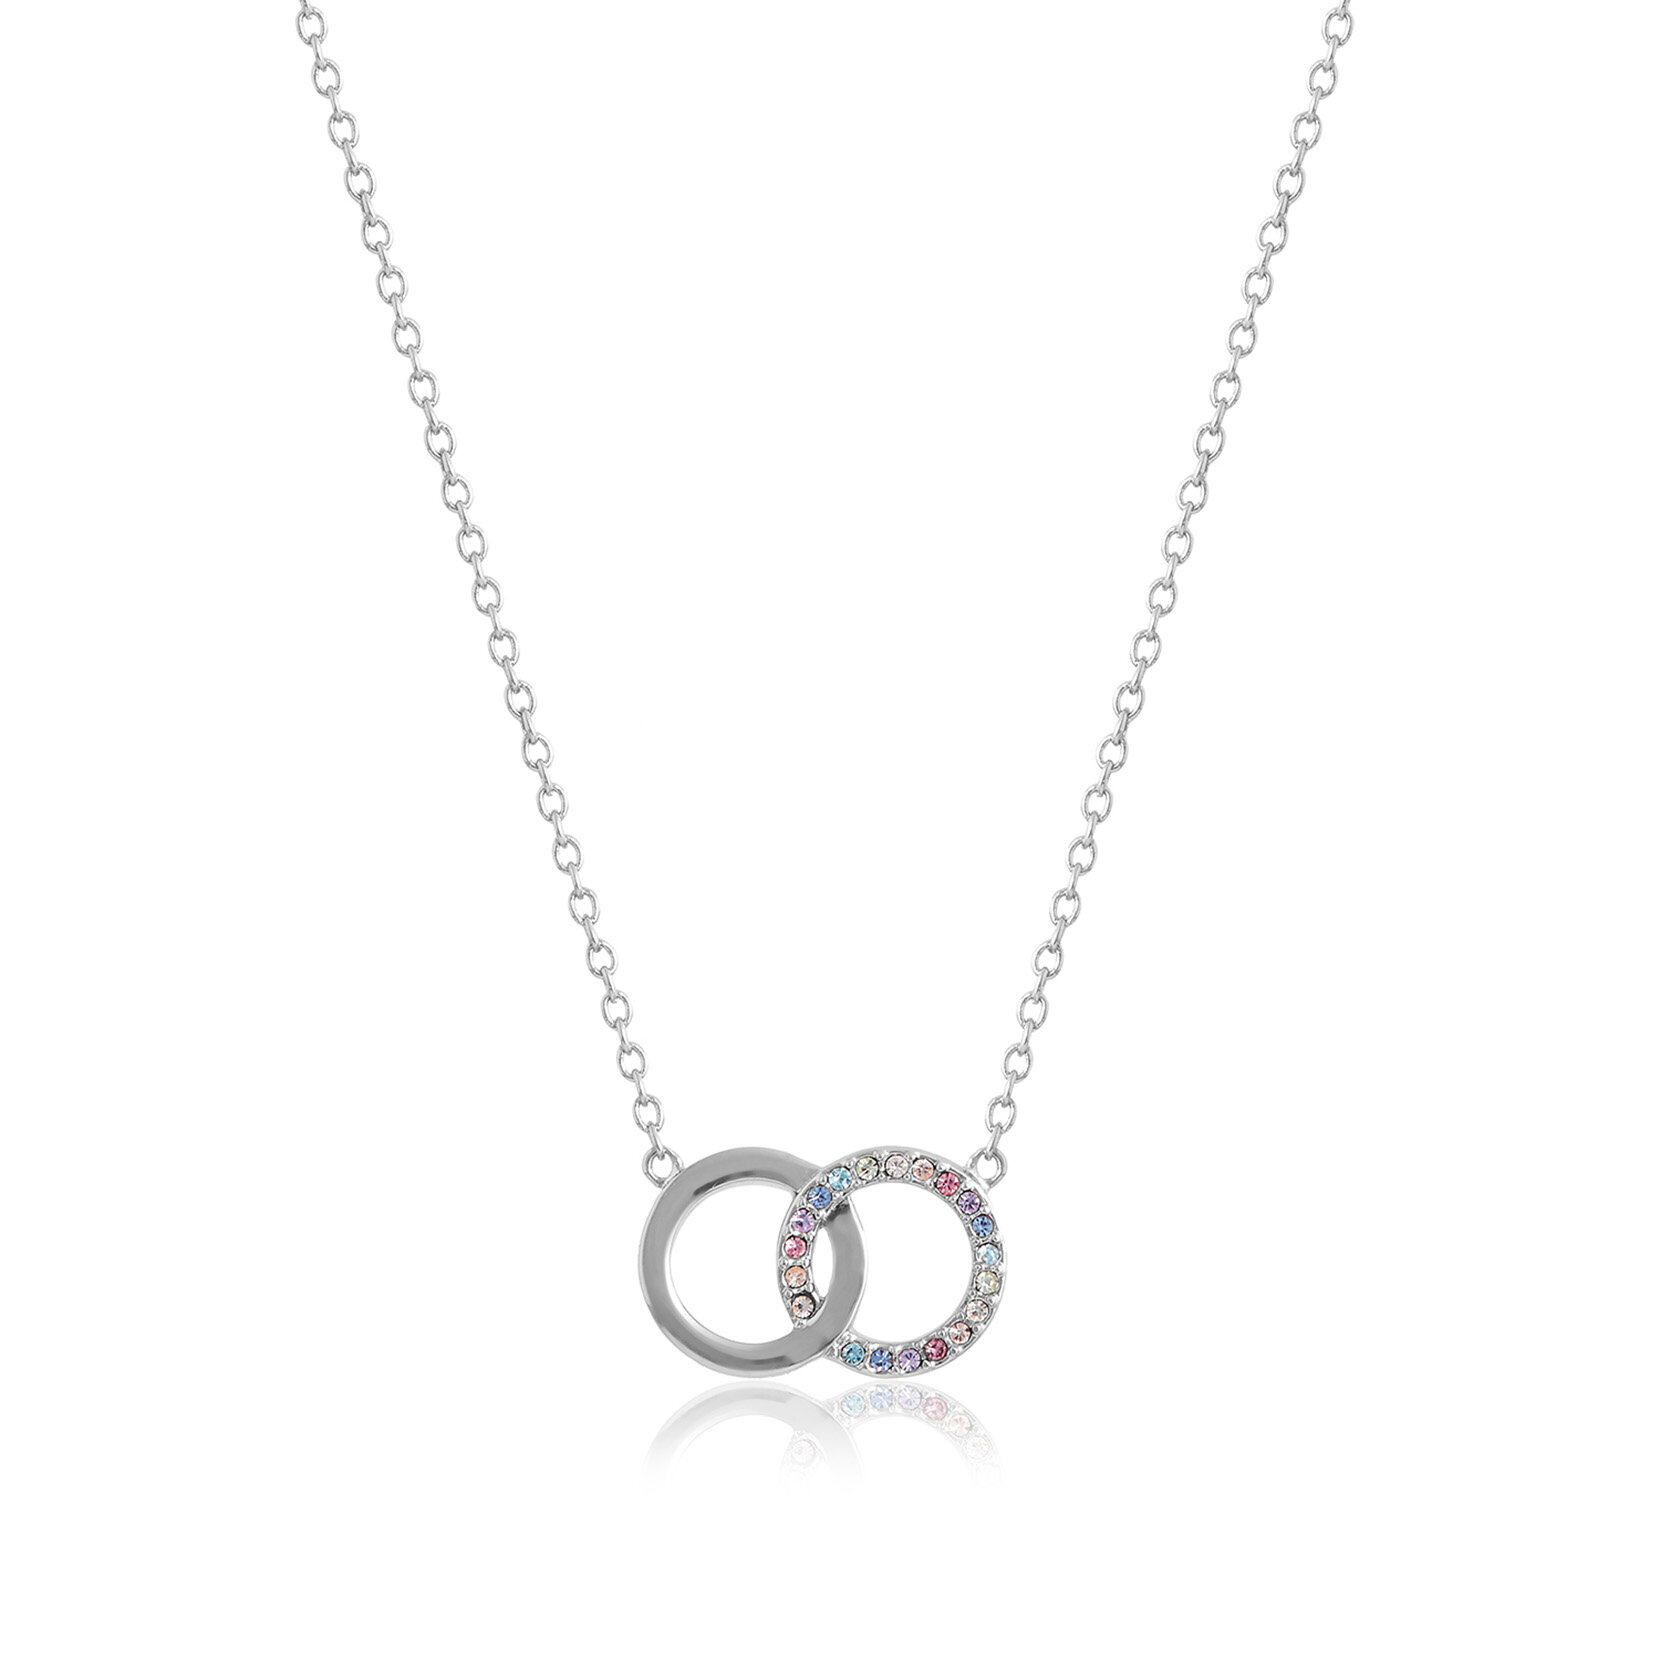 Silver Choker & Interlink Necklace Gift Set